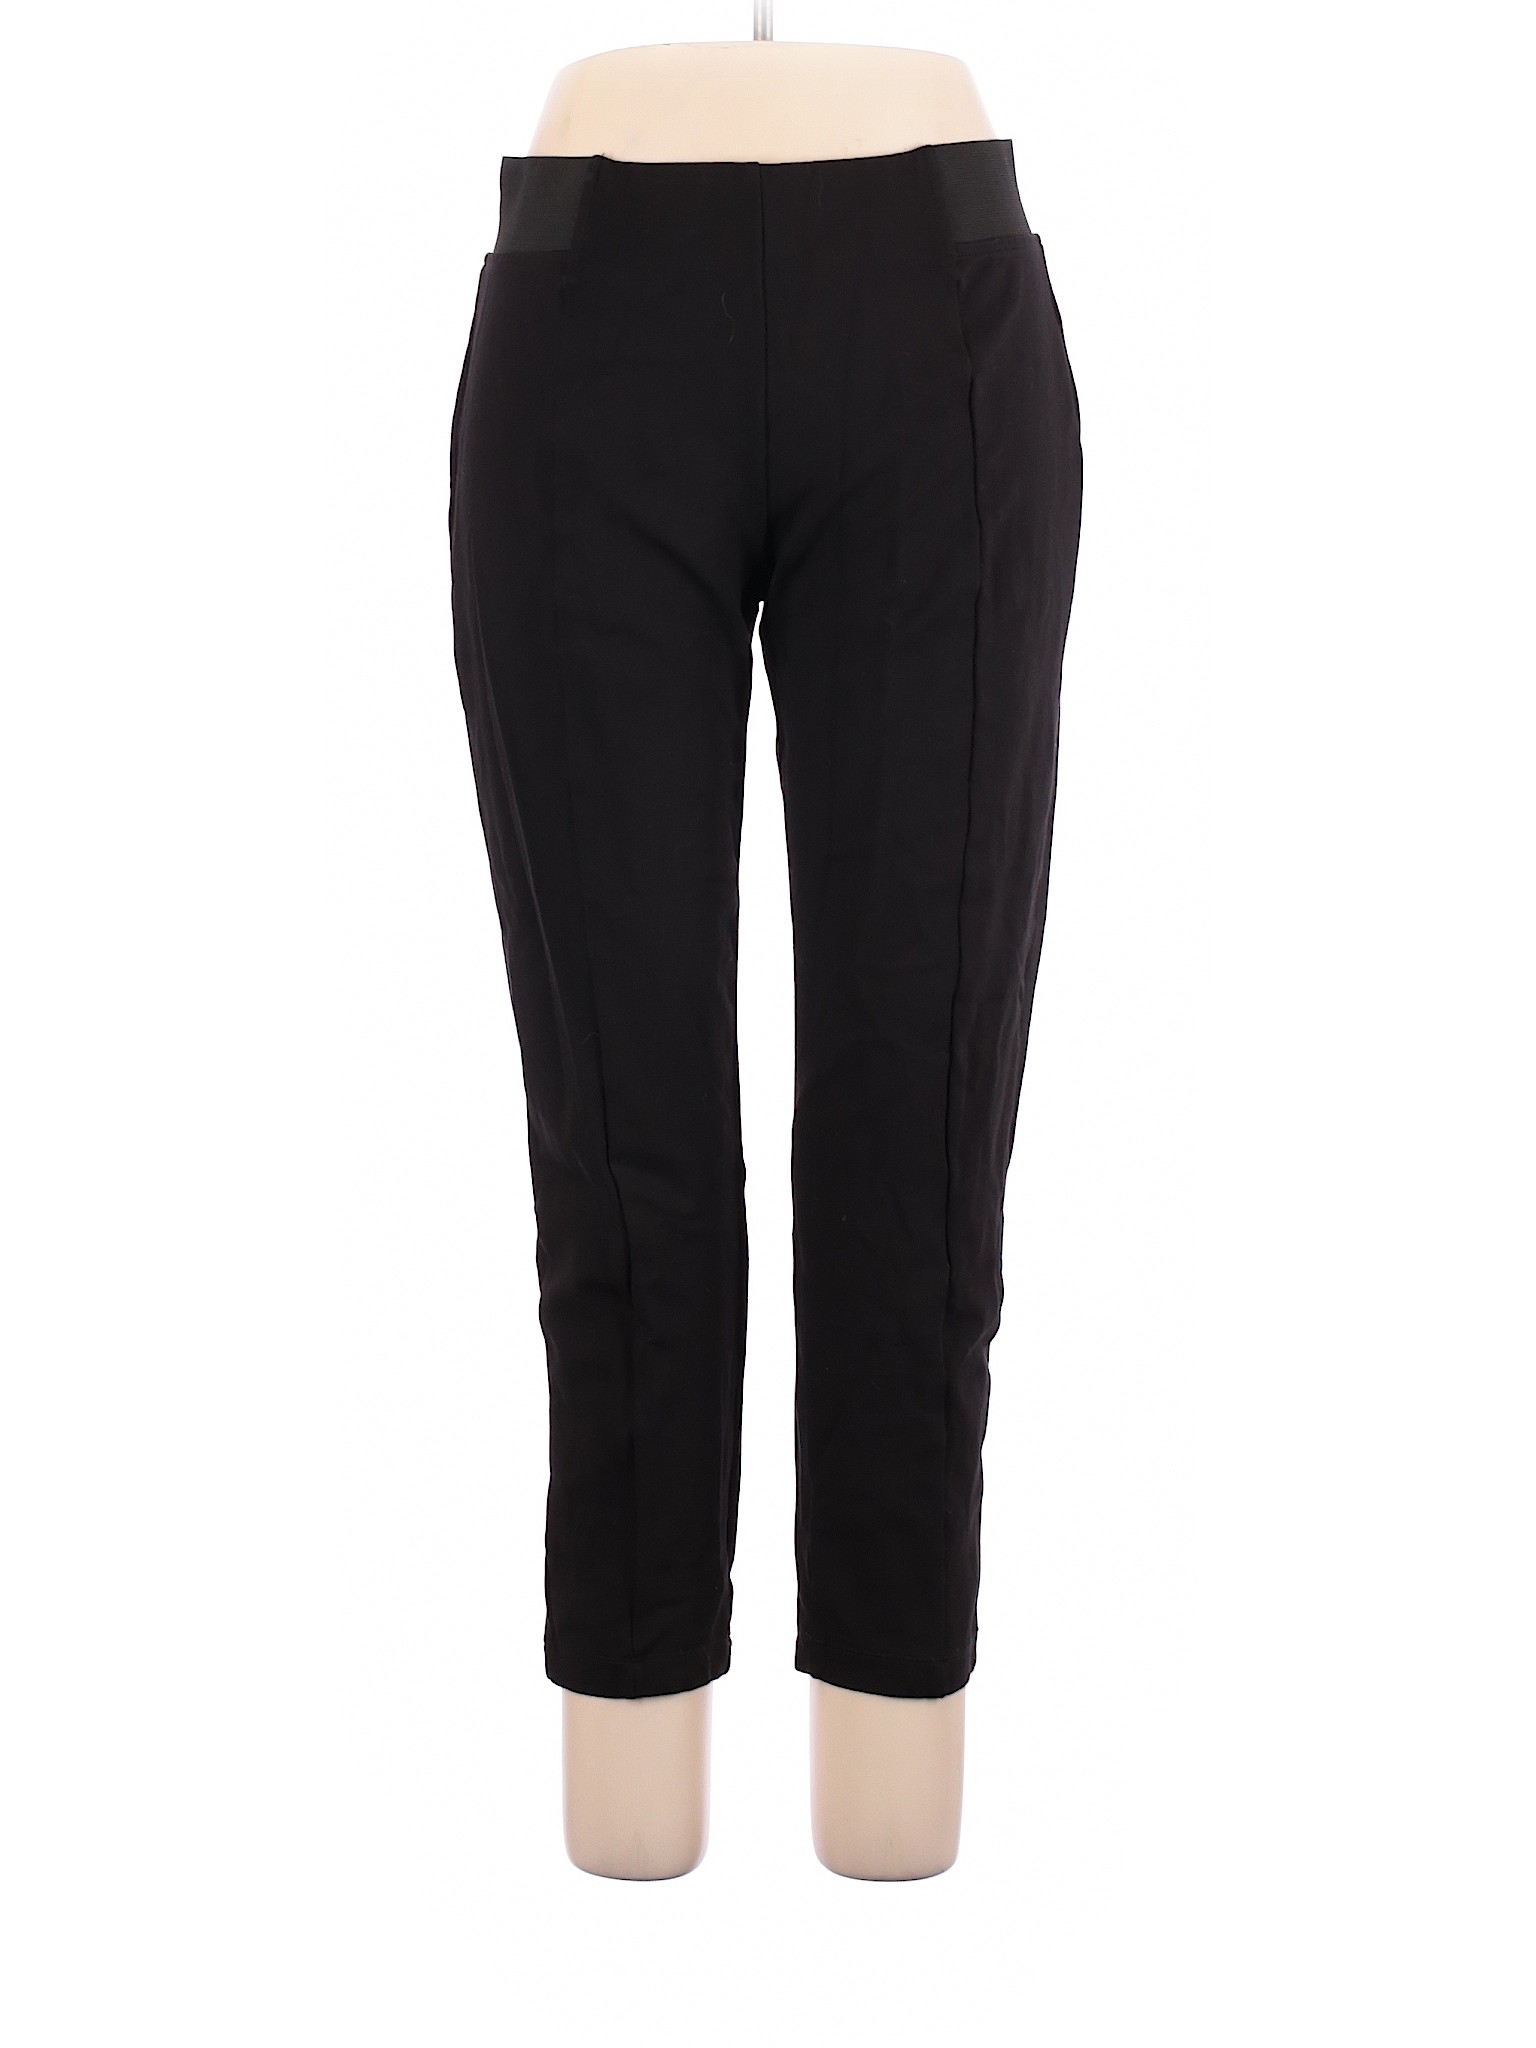 Terra & Sky Black Casual Pants Size 0X (Plus) - 58% off | thredUP